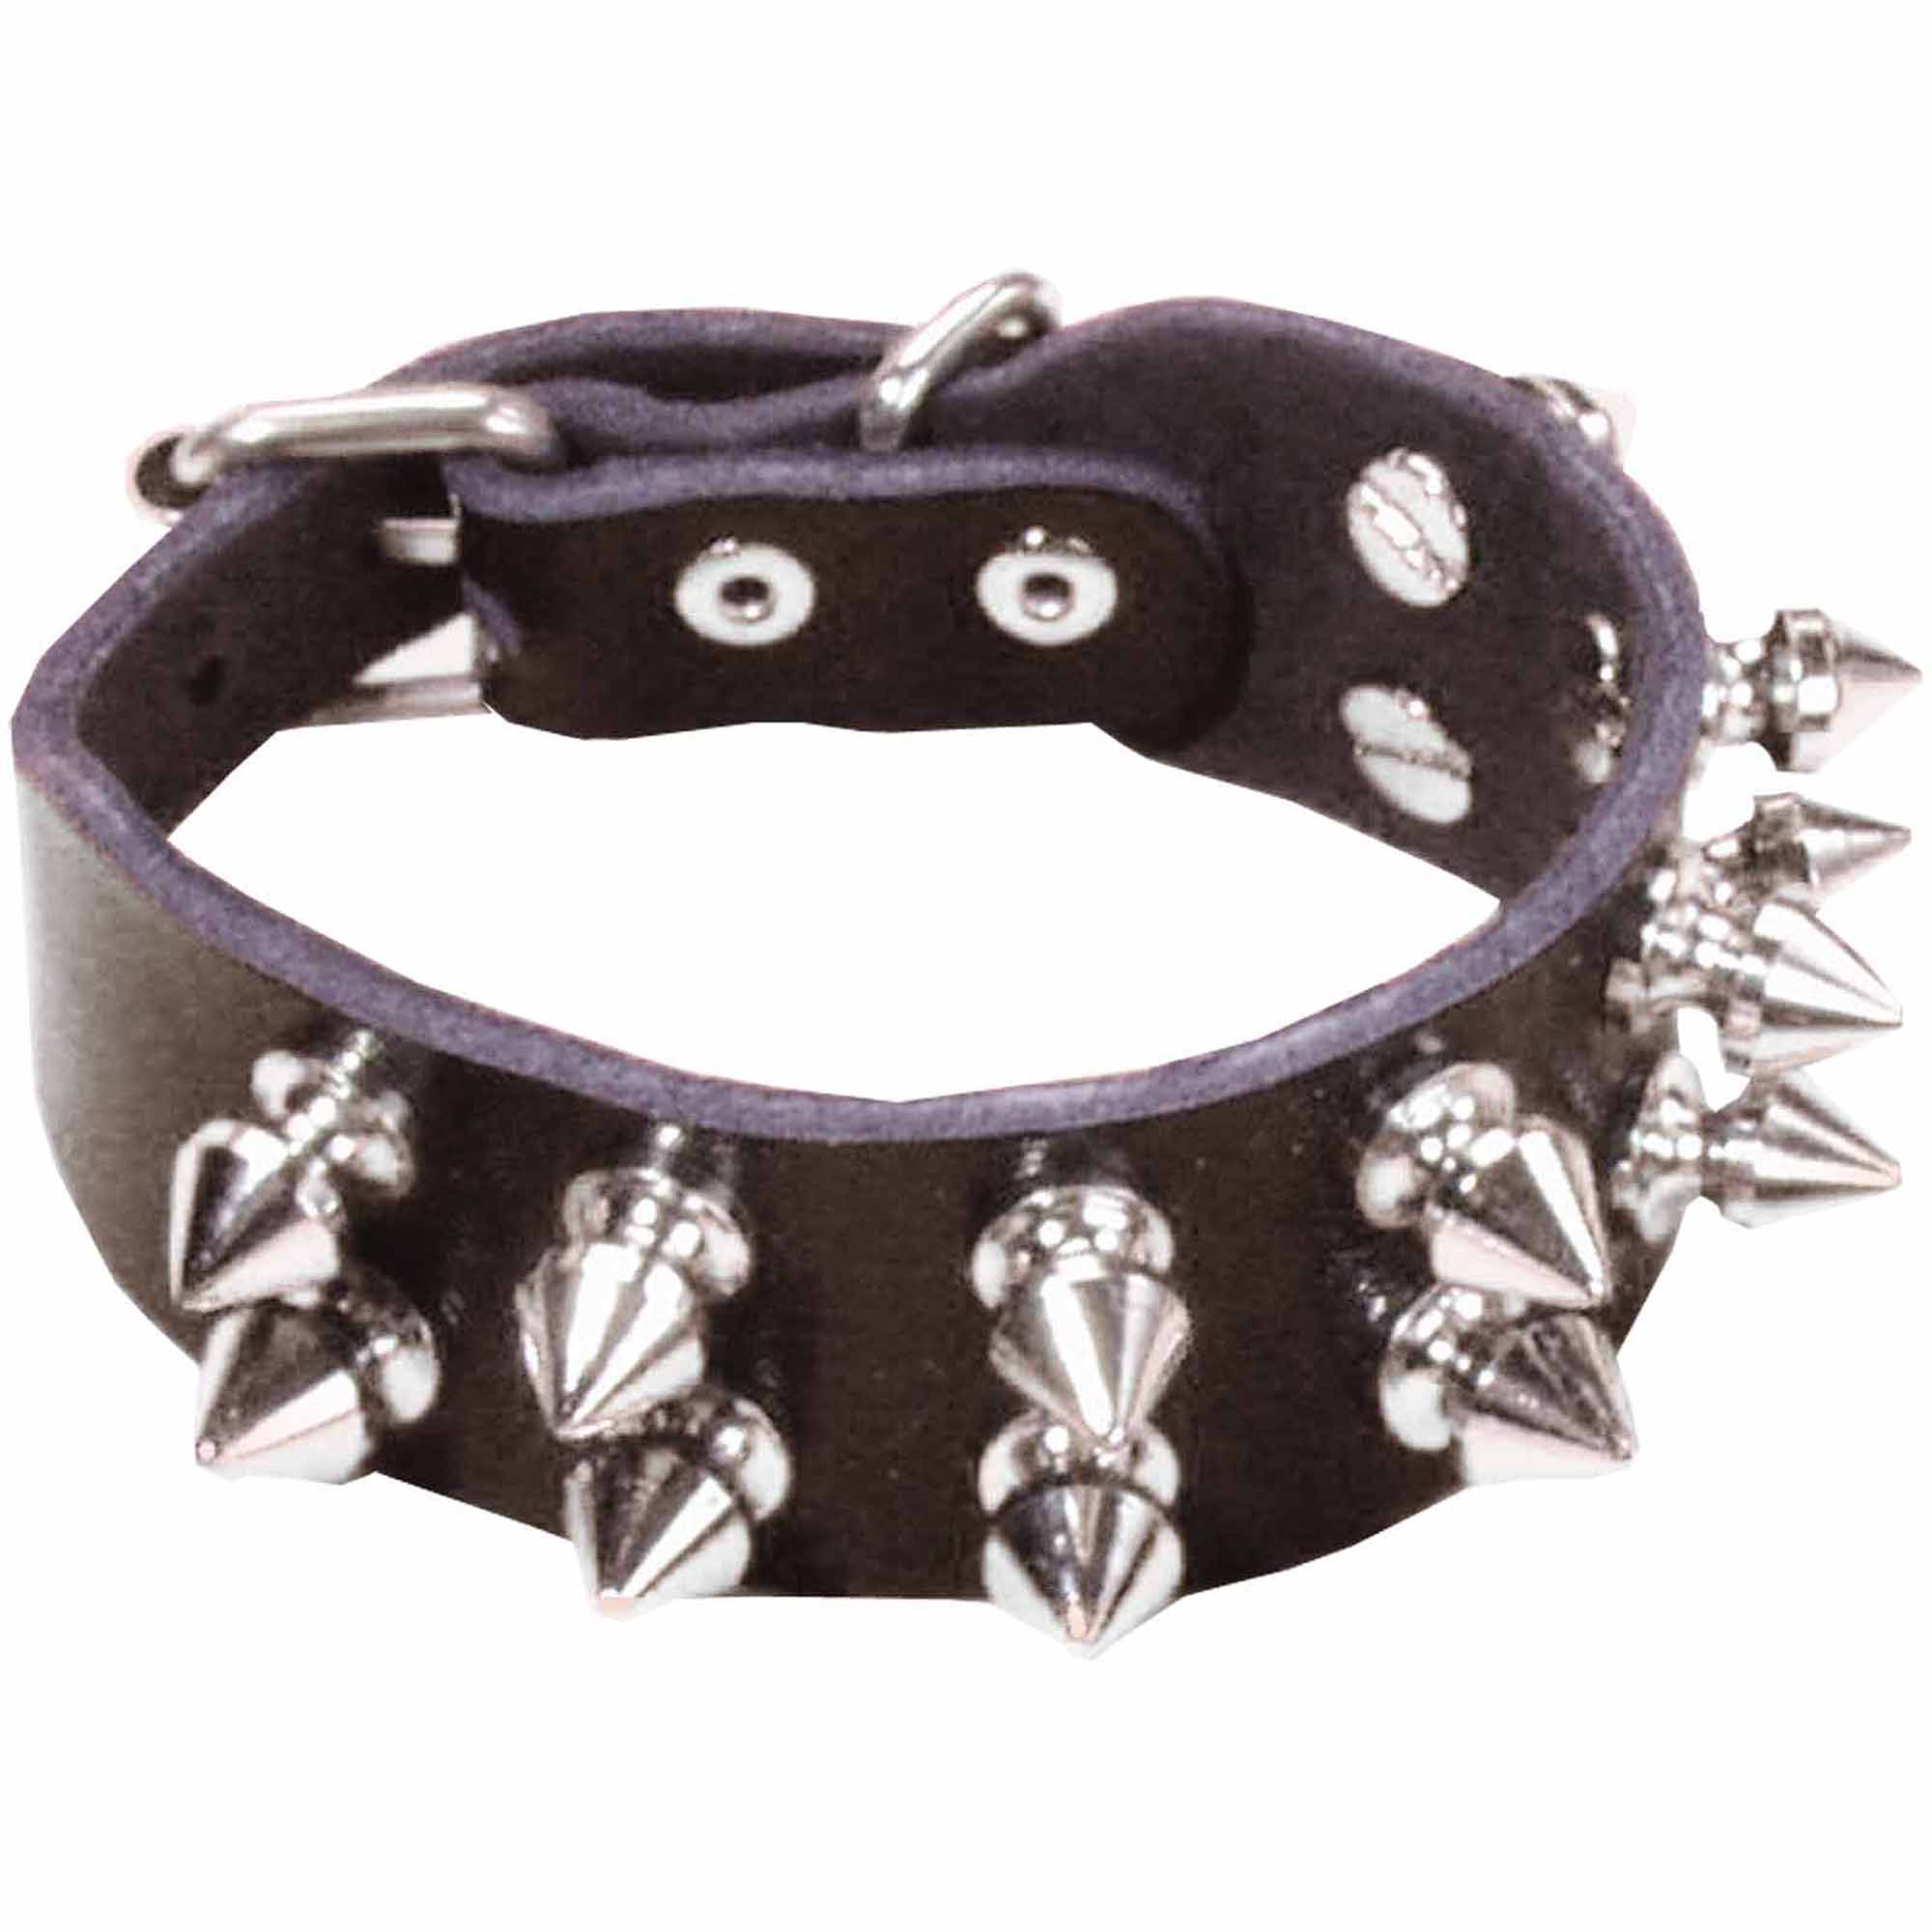 Spike Bracelet Adult Halloween Accessory